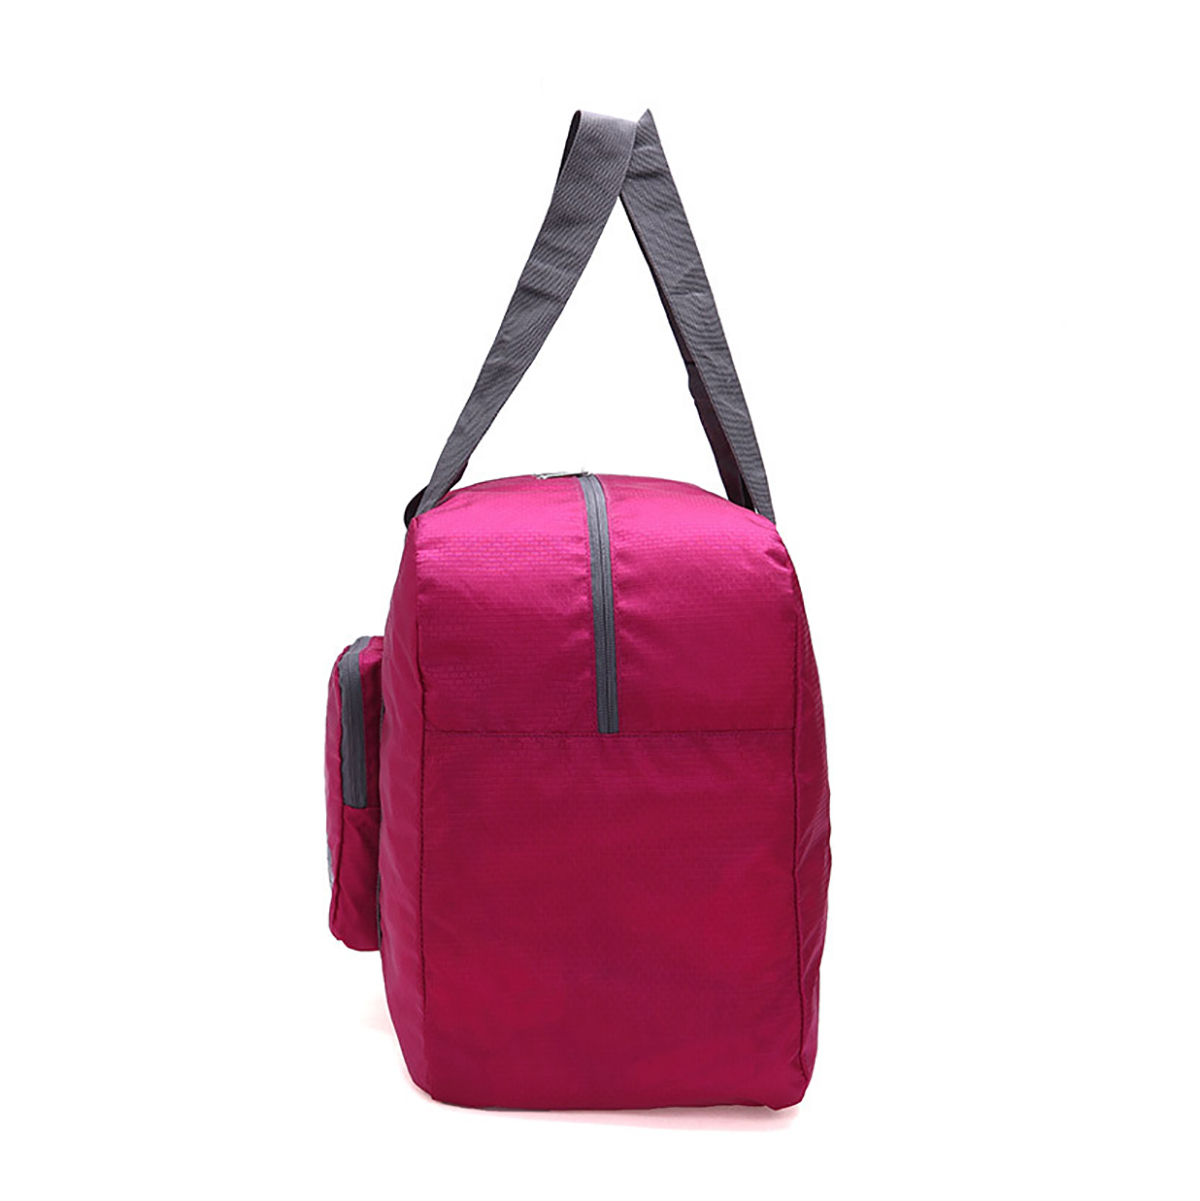 38L-Waterproof-Foldable-Duffle-Bag-Travel-Luggage-Baggage-Sports-Gym-Storage-Bag-1621904-6